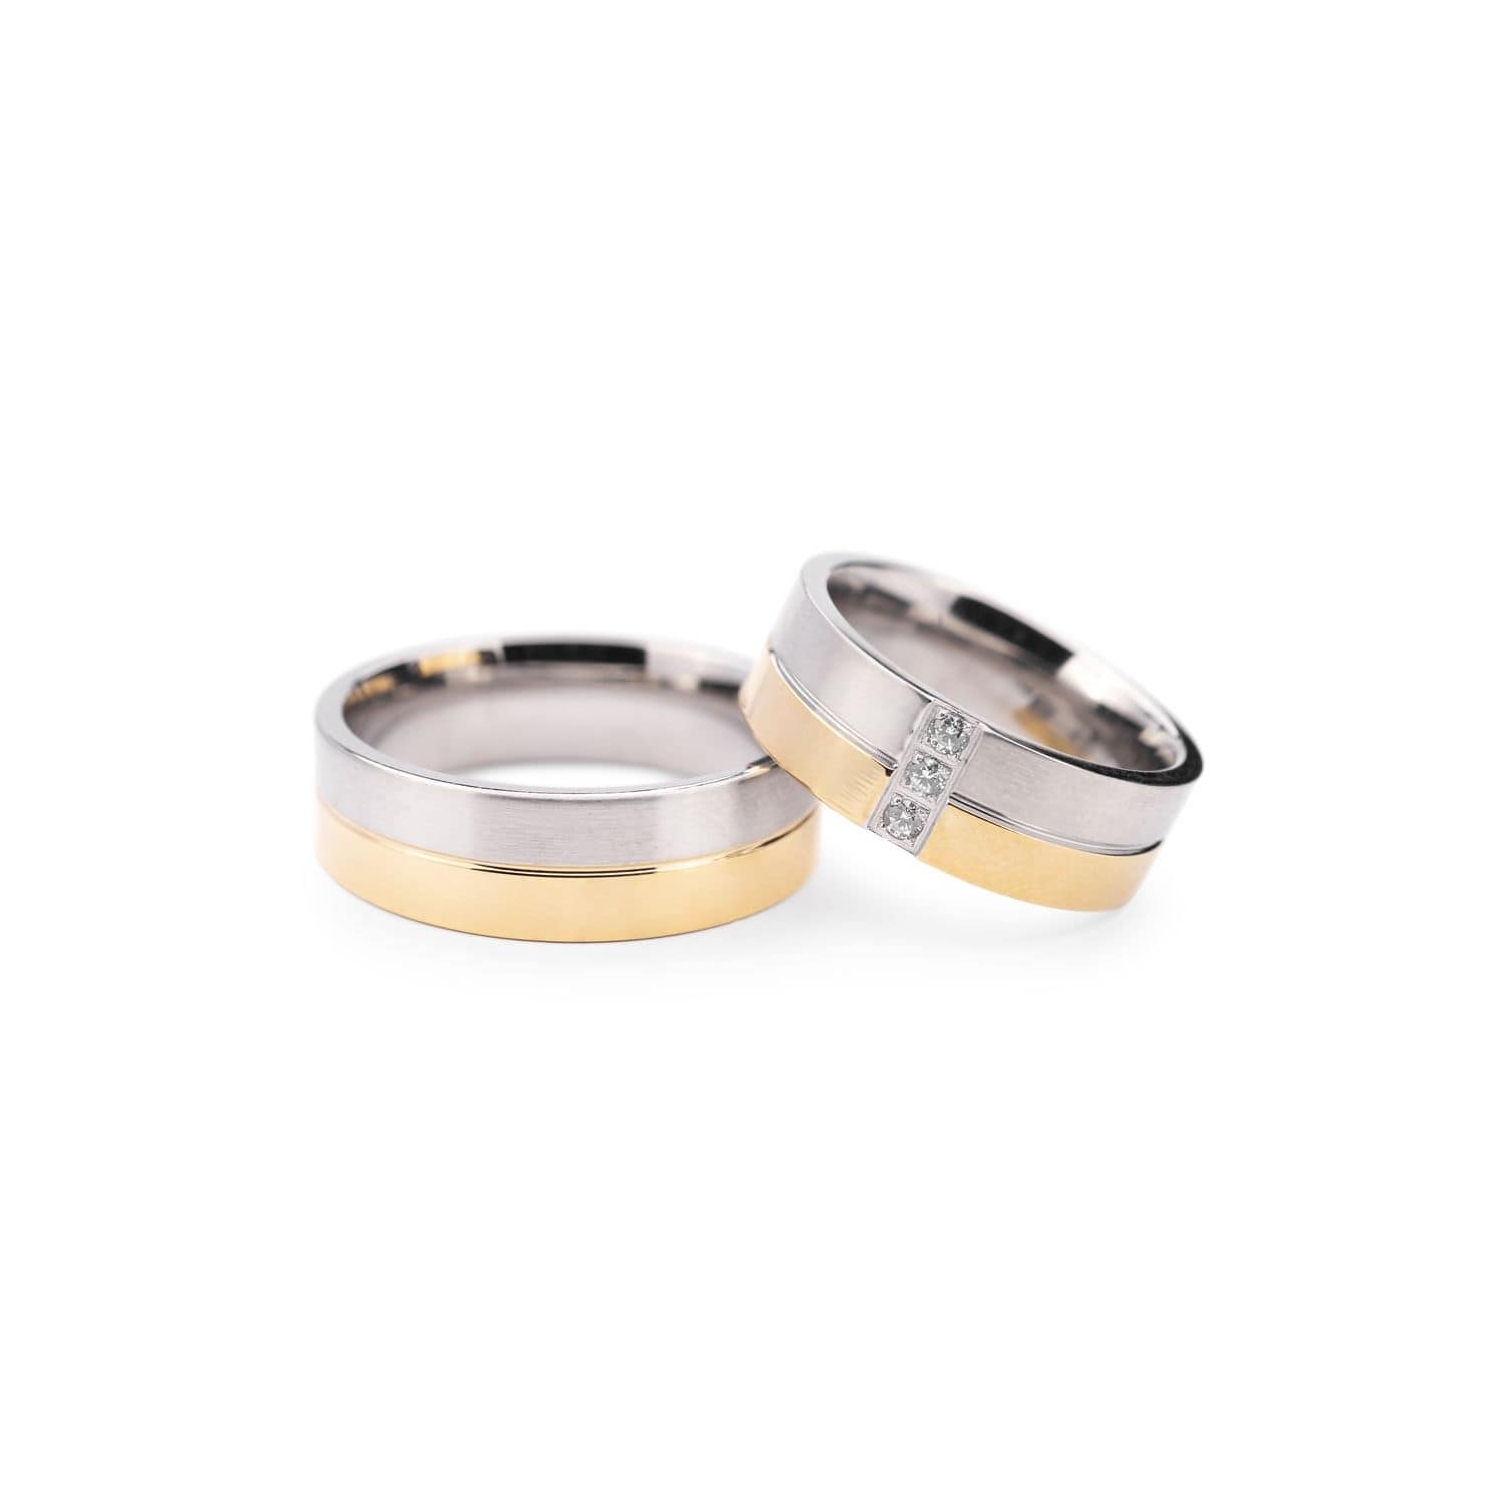 Golden wedding rings with diamonds "VMA 132"